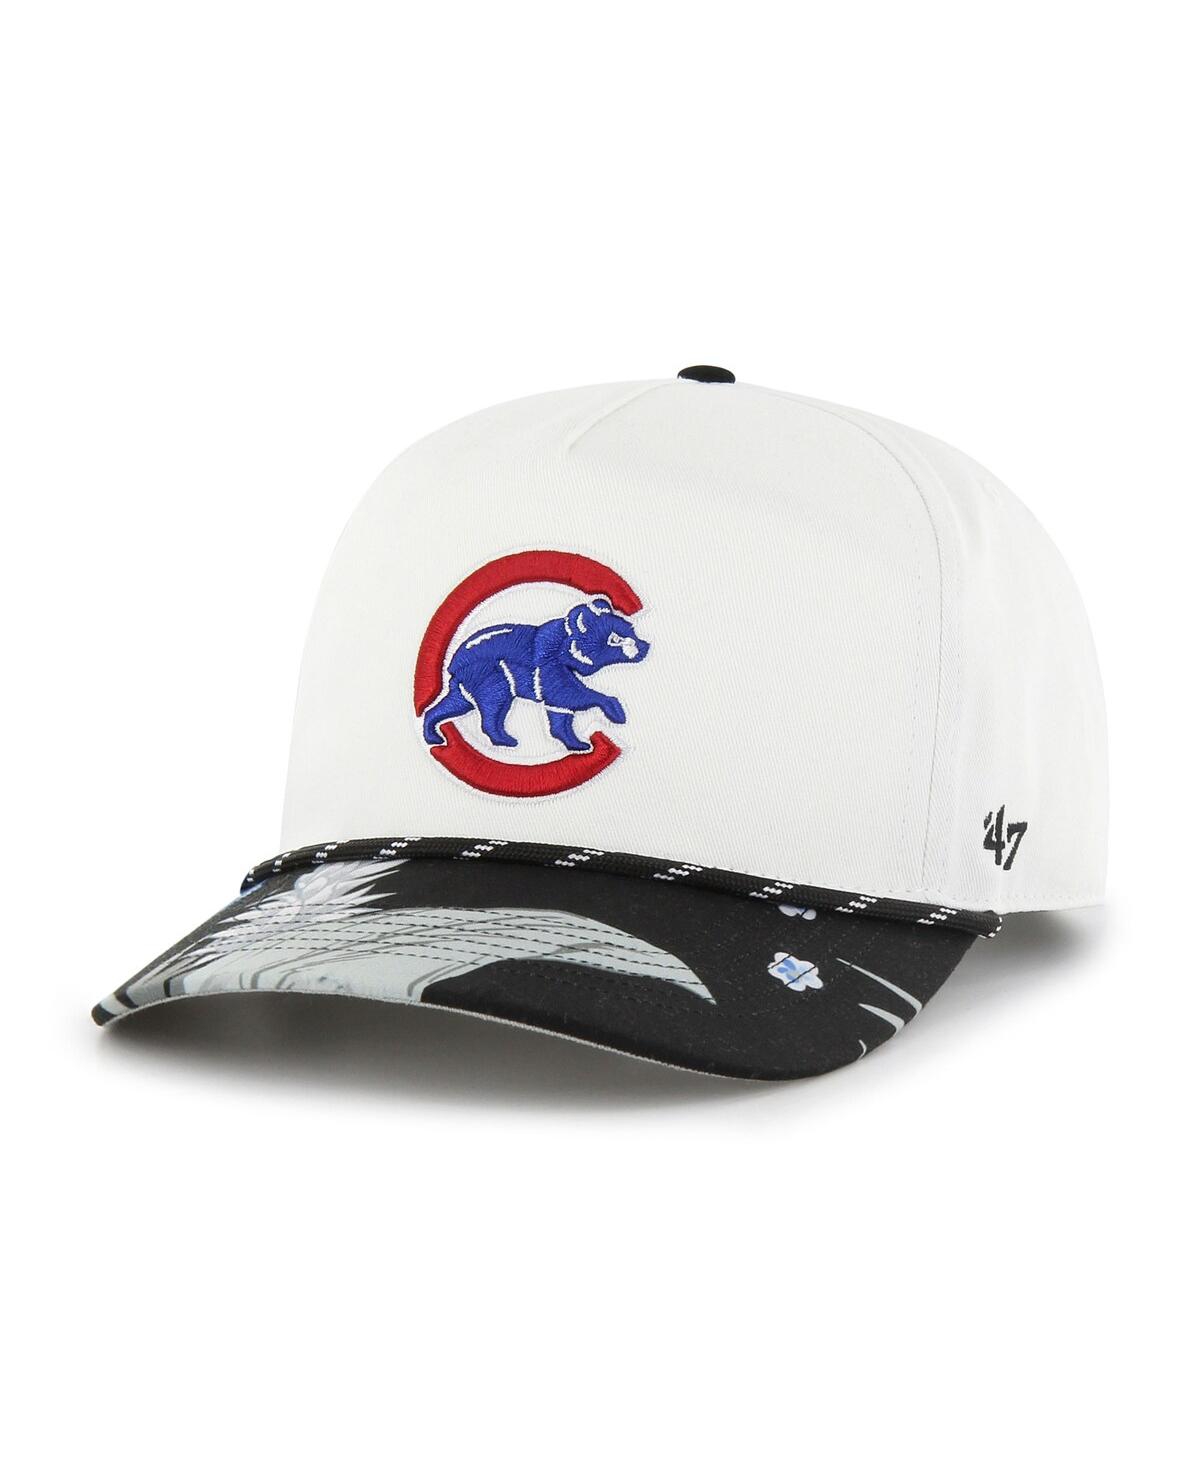 47 Brand Men's ' White Chicago Cubs Dark Tropic Hitch Snapback Hat